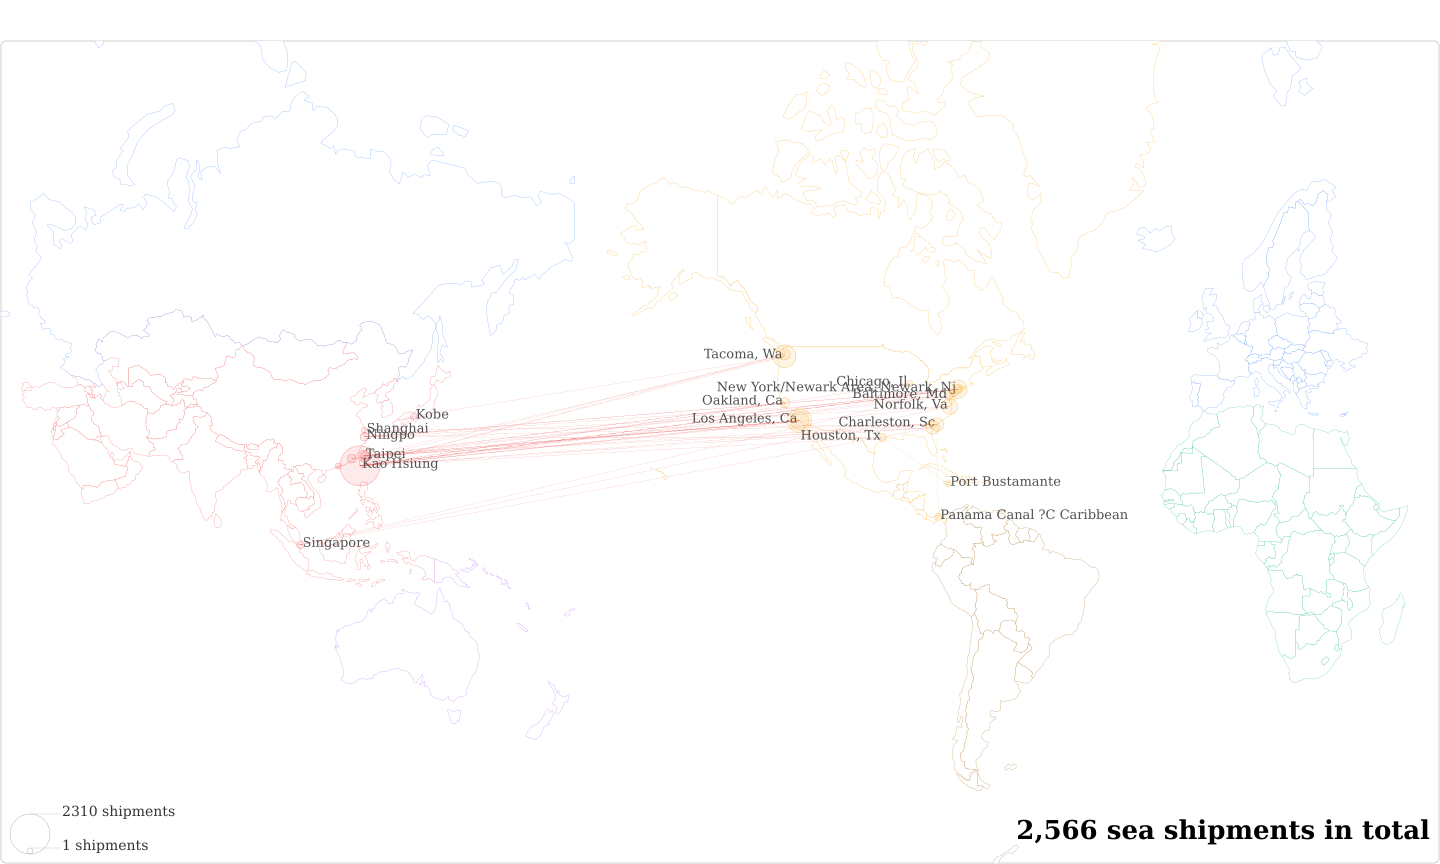 Fang Sheng Screw's Imports Per Country Map